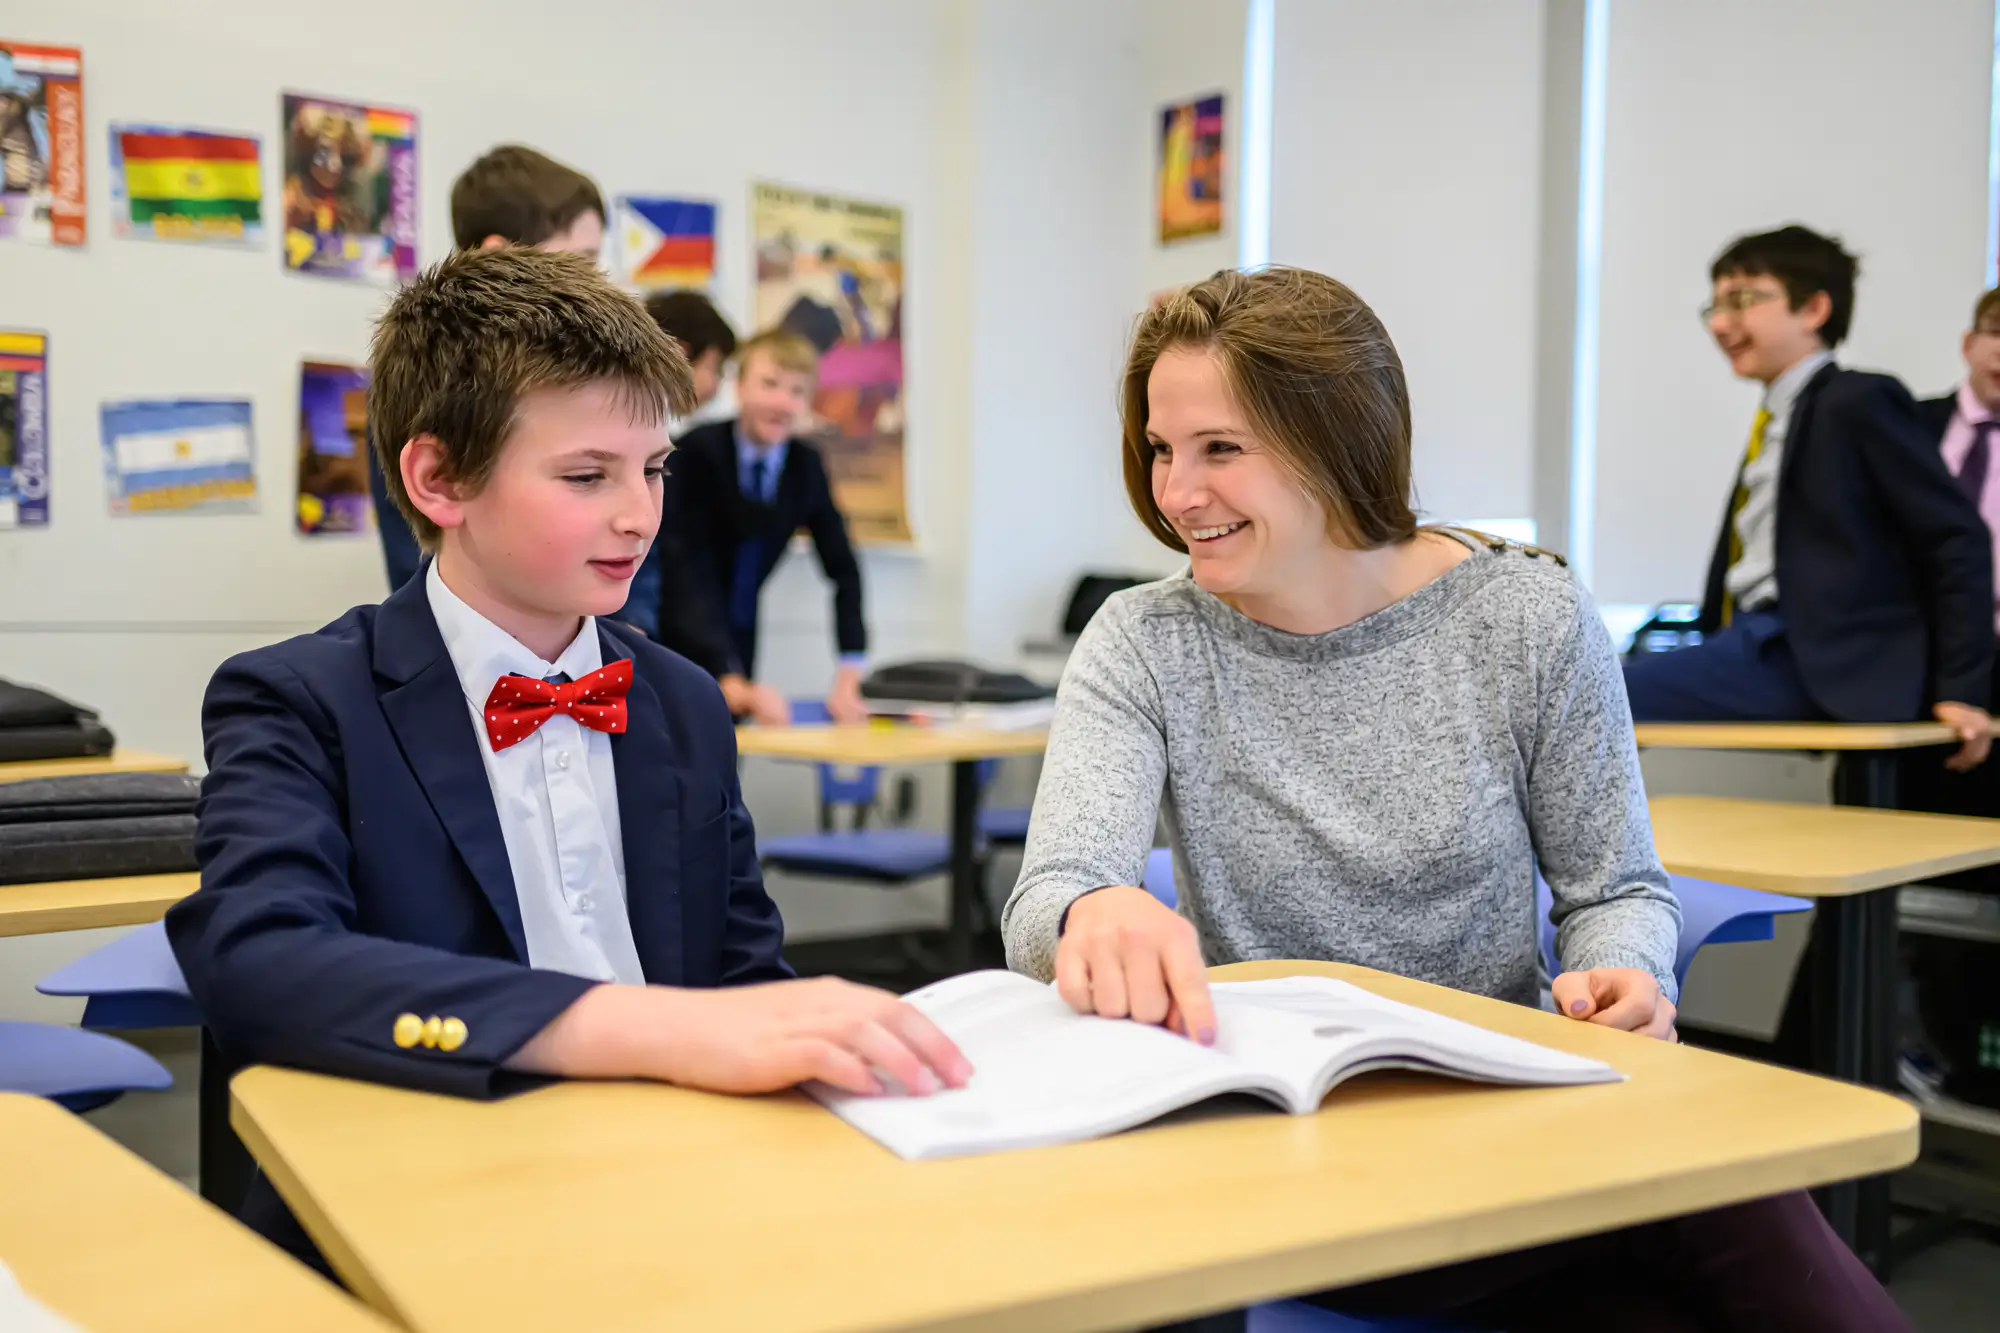 a female teacher helps a boy student